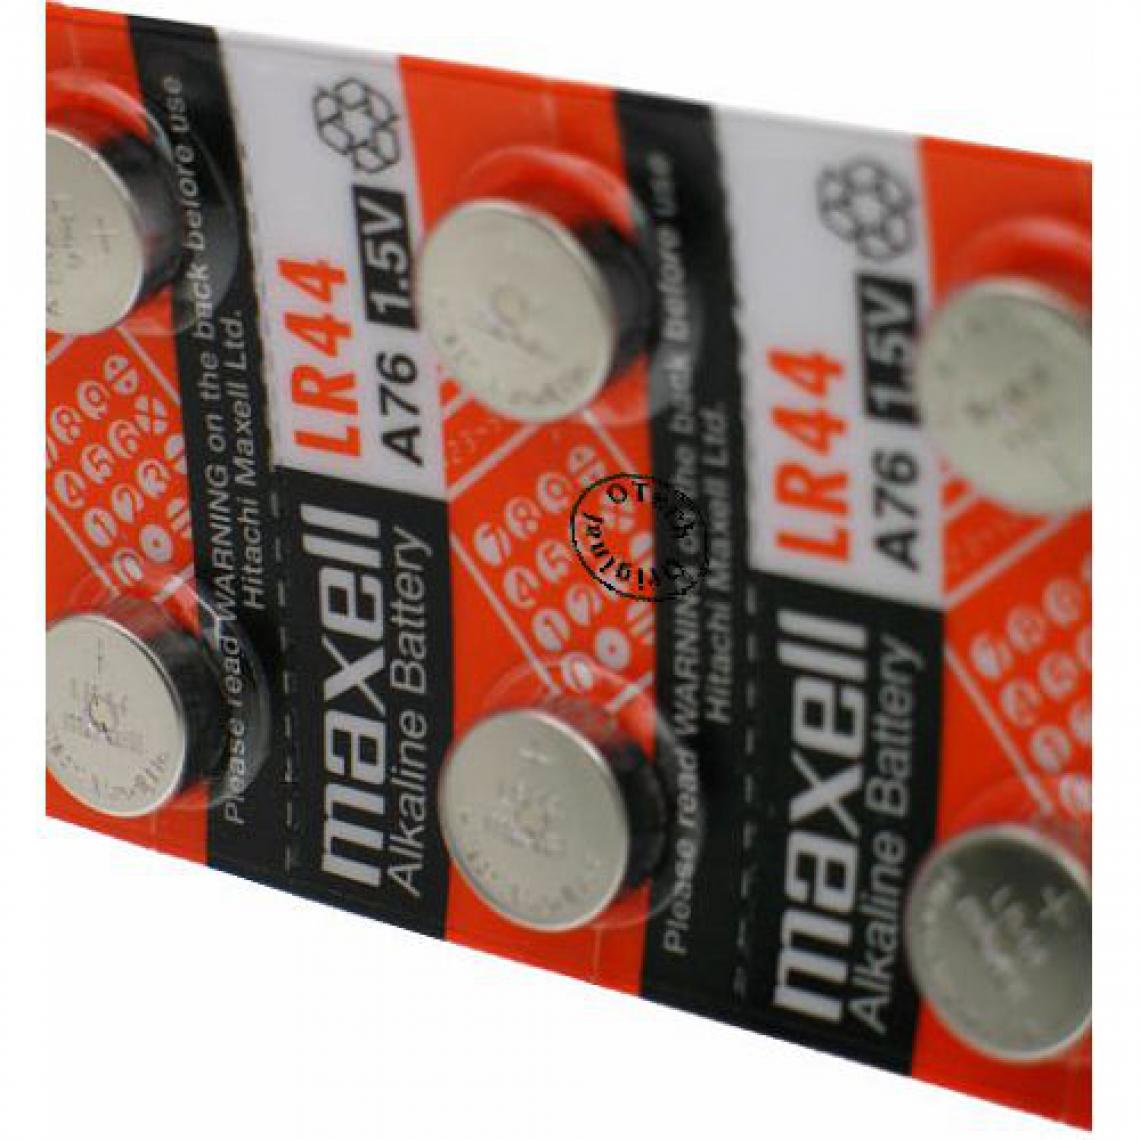 Otech - Pack de 10 piles maxell pour MAXELL LR44G - Piles rechargeables